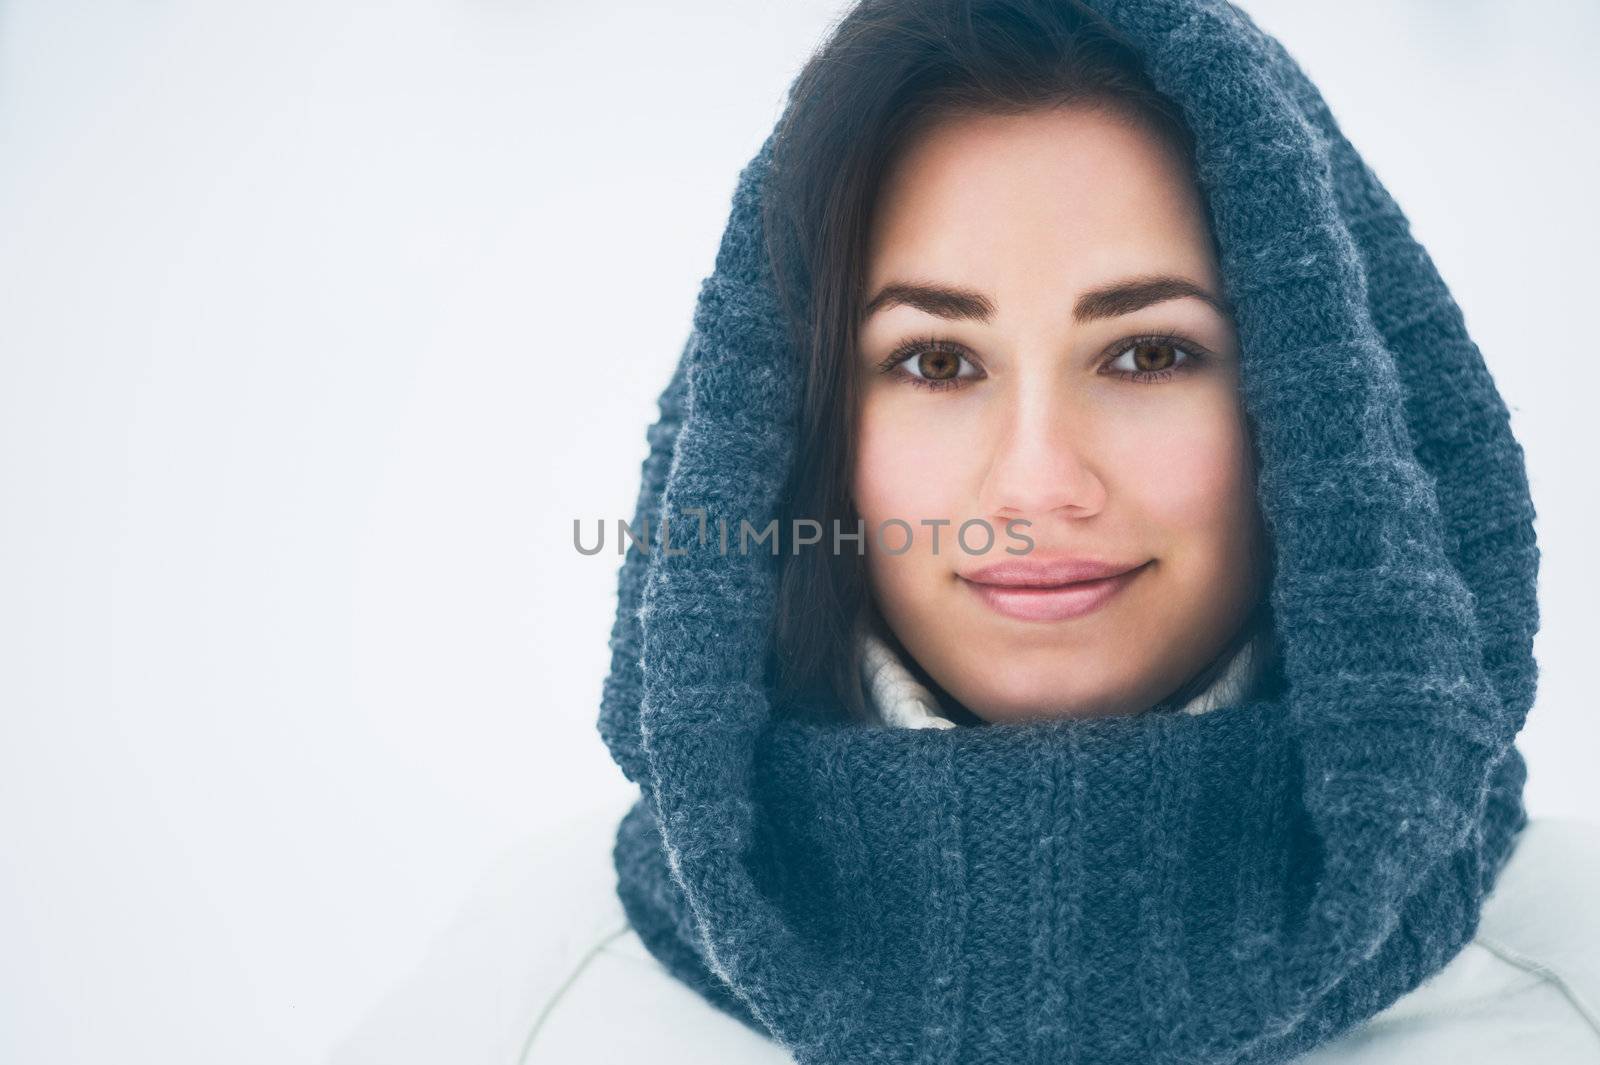 Winter girl by nvelichko